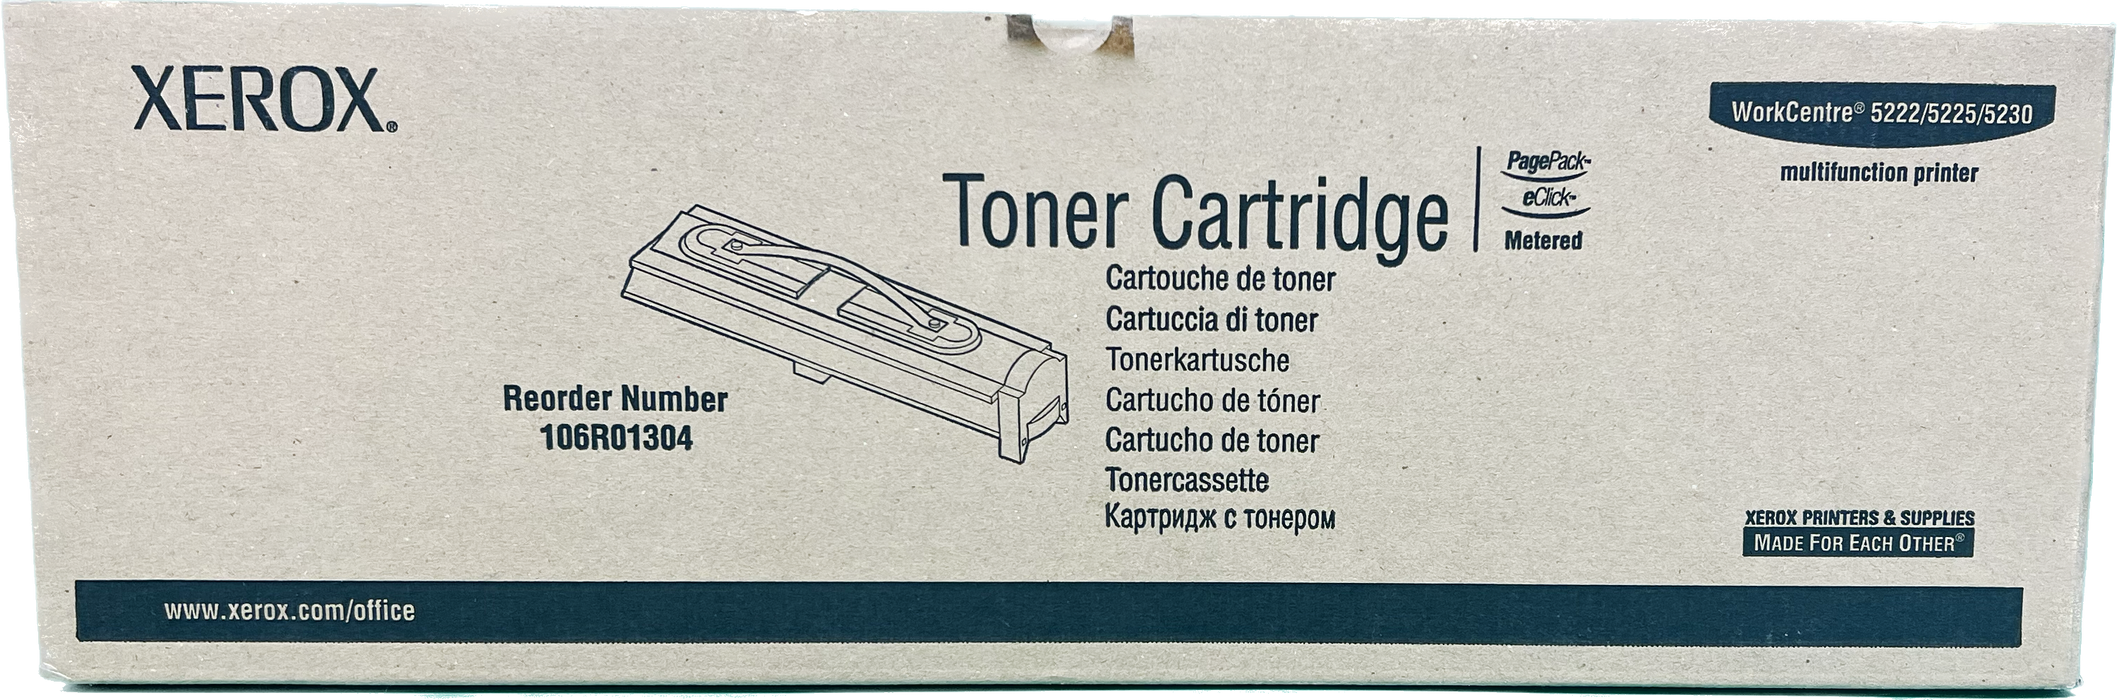 Genuine Xerox Black Toner Cartridge | OEM 106R01304 | CT201122 | WorkCentre 5222/5225/5230